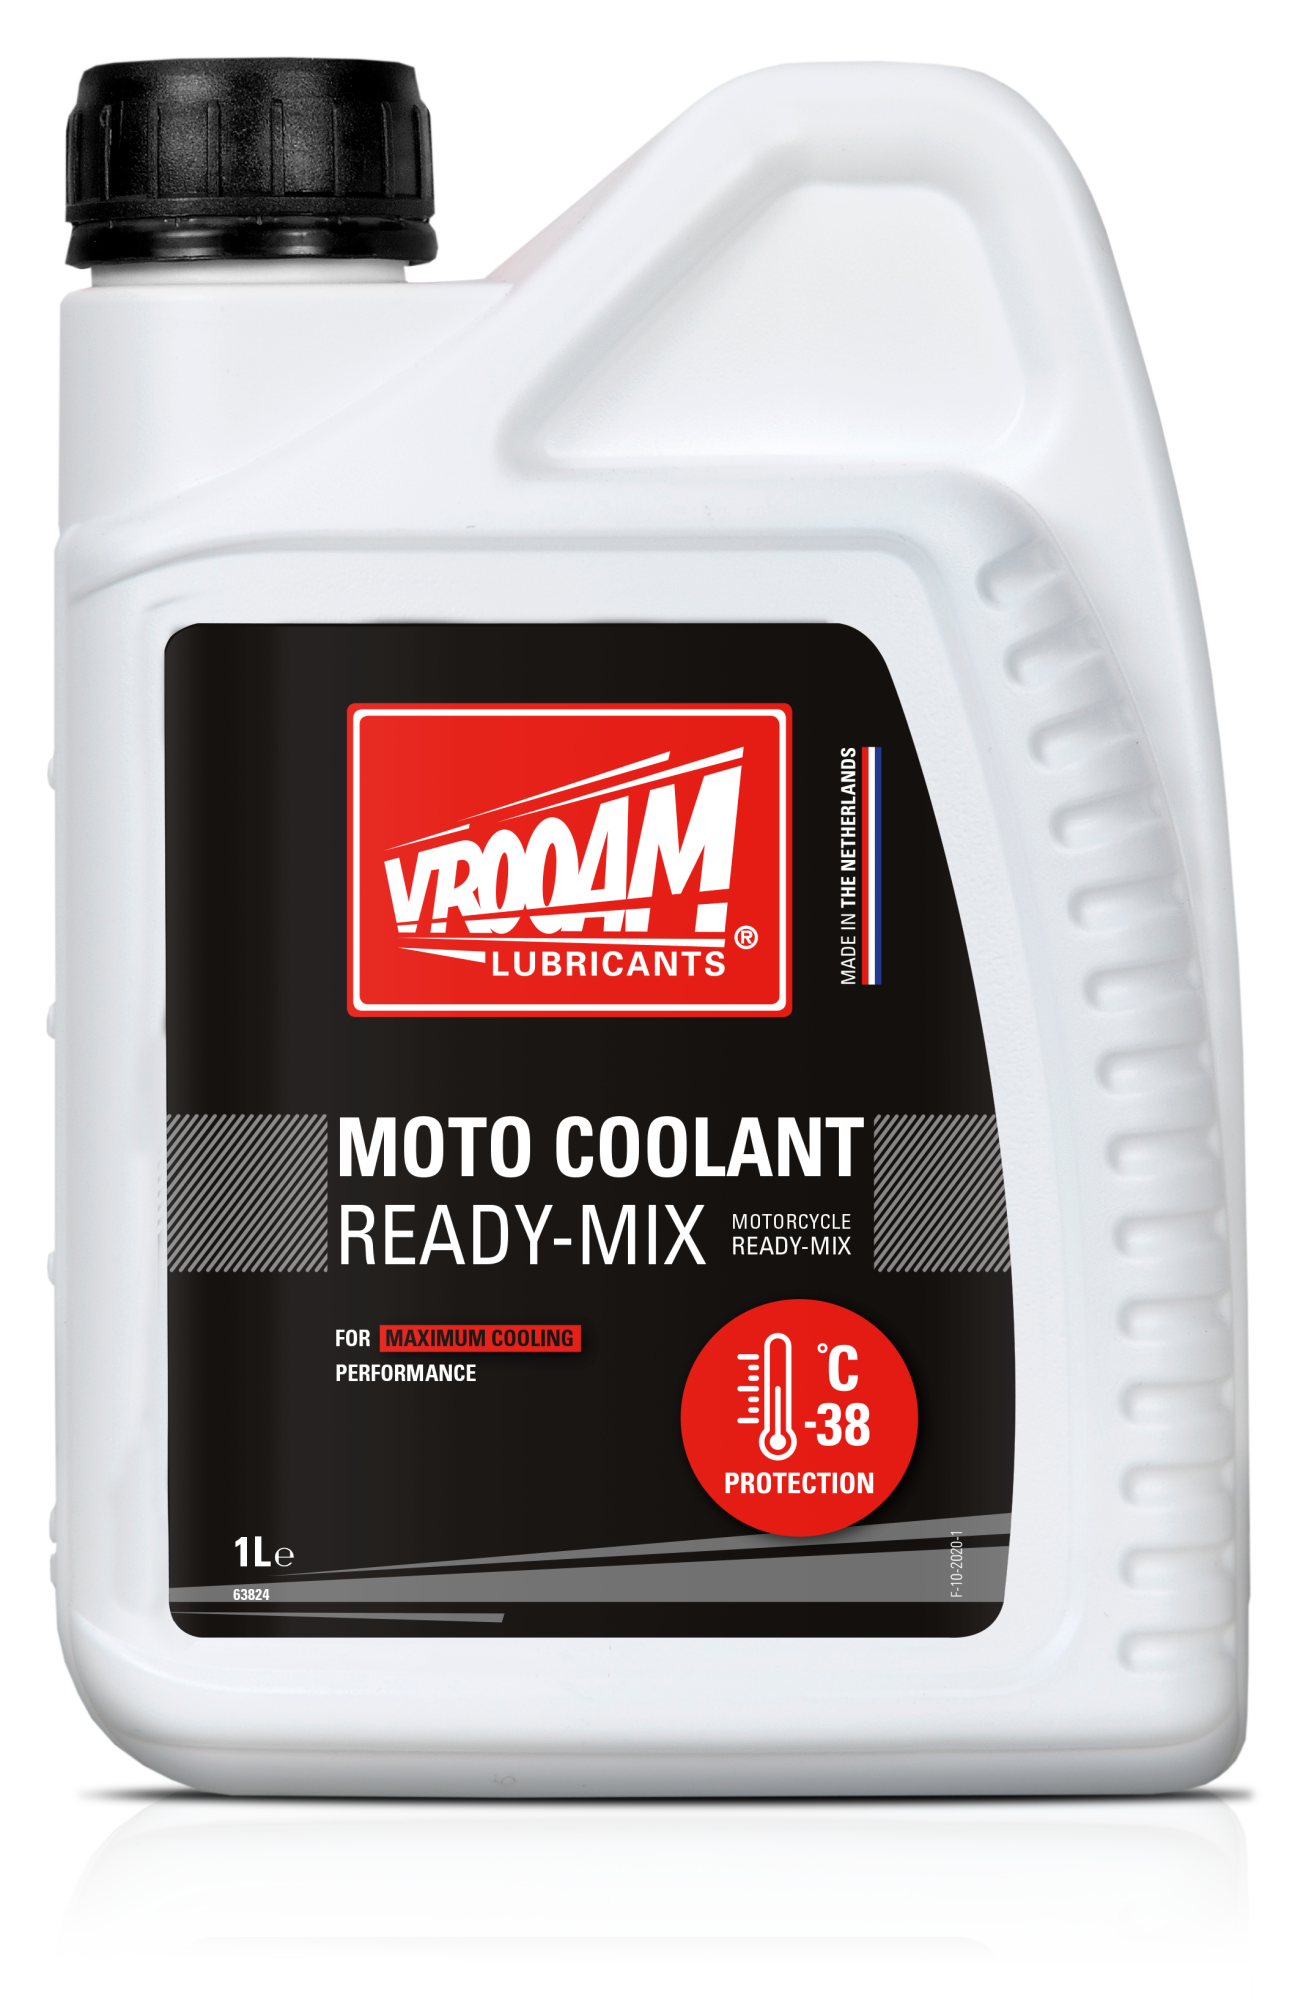 VROOAM Moto Coolant Ready-Mix -38